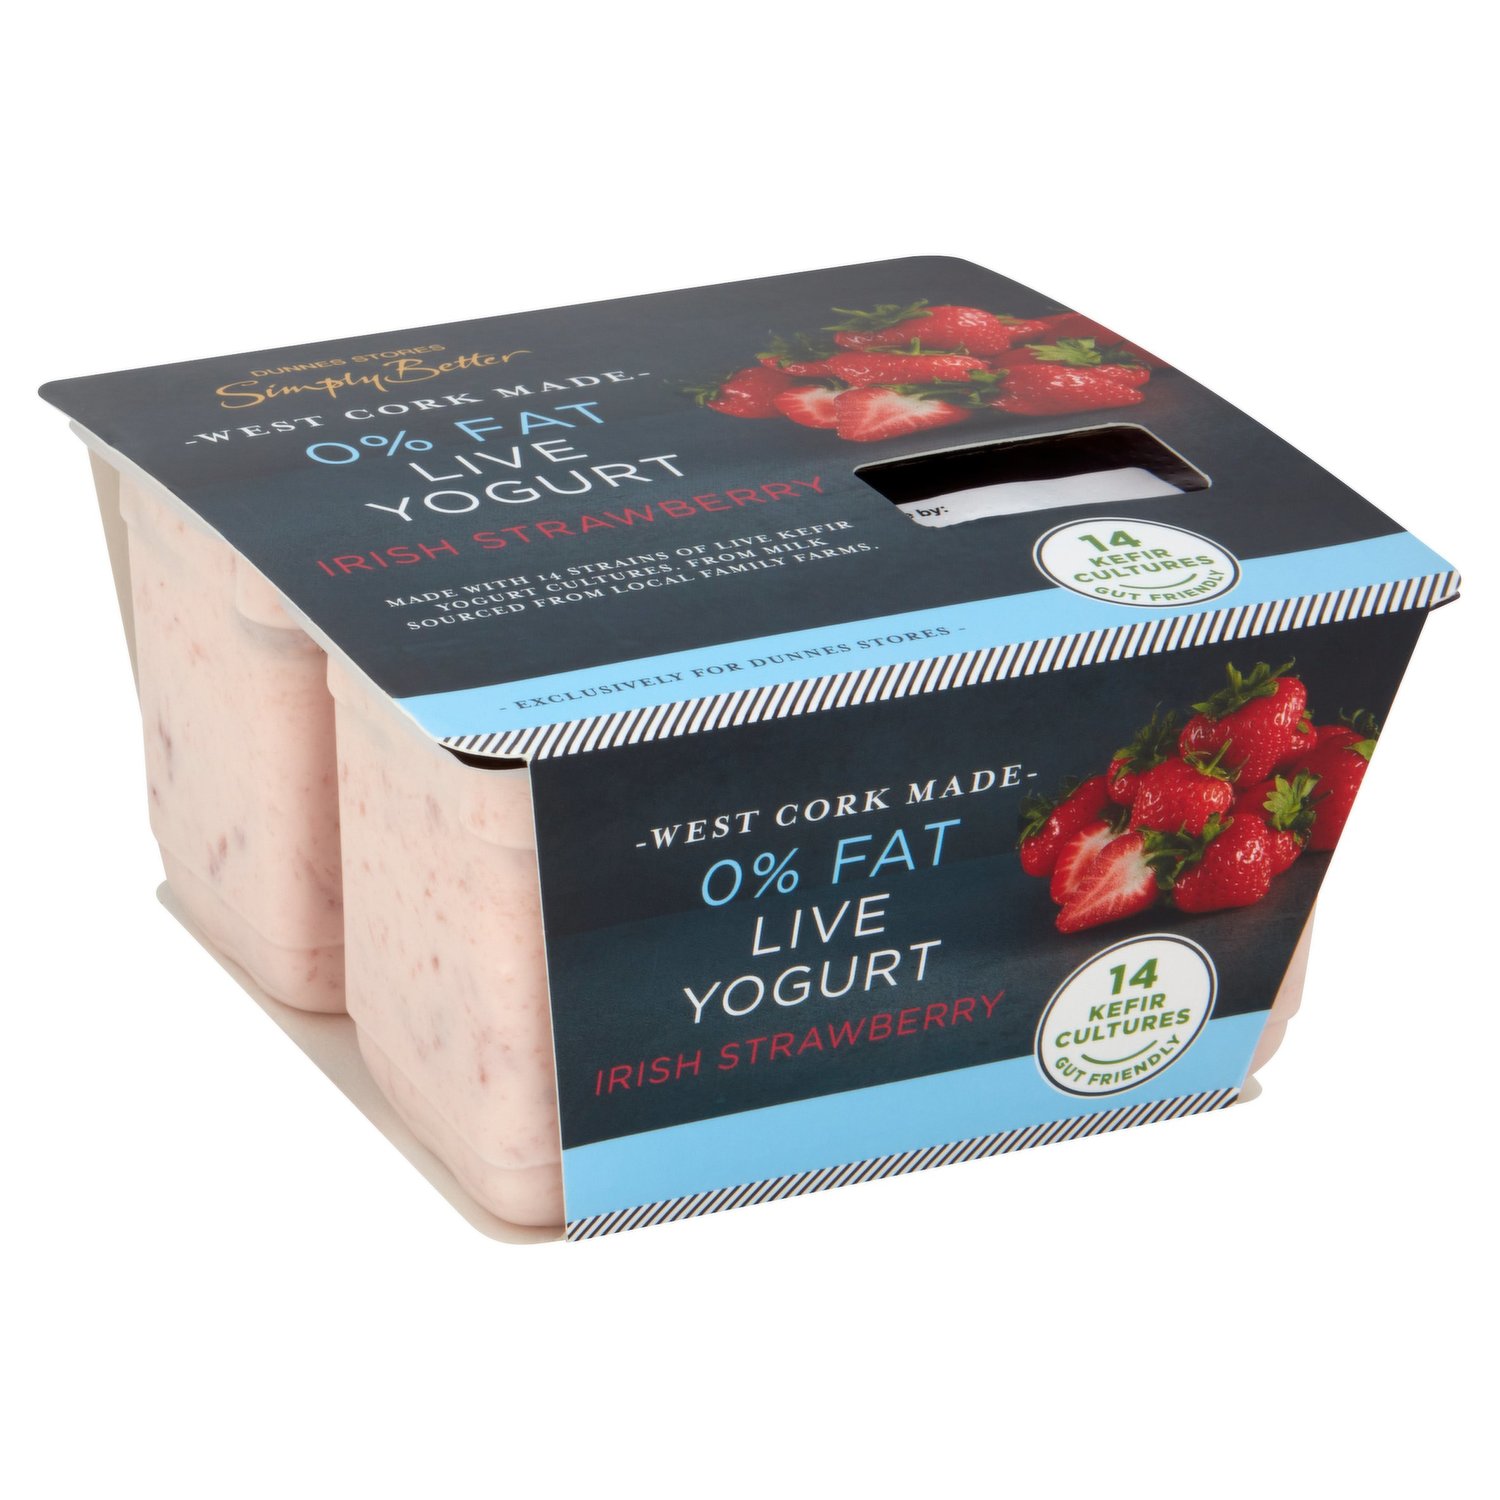 Dunnes Stores Simply Better 0% Fat Live Yogurt Irish Strawberry 4 x